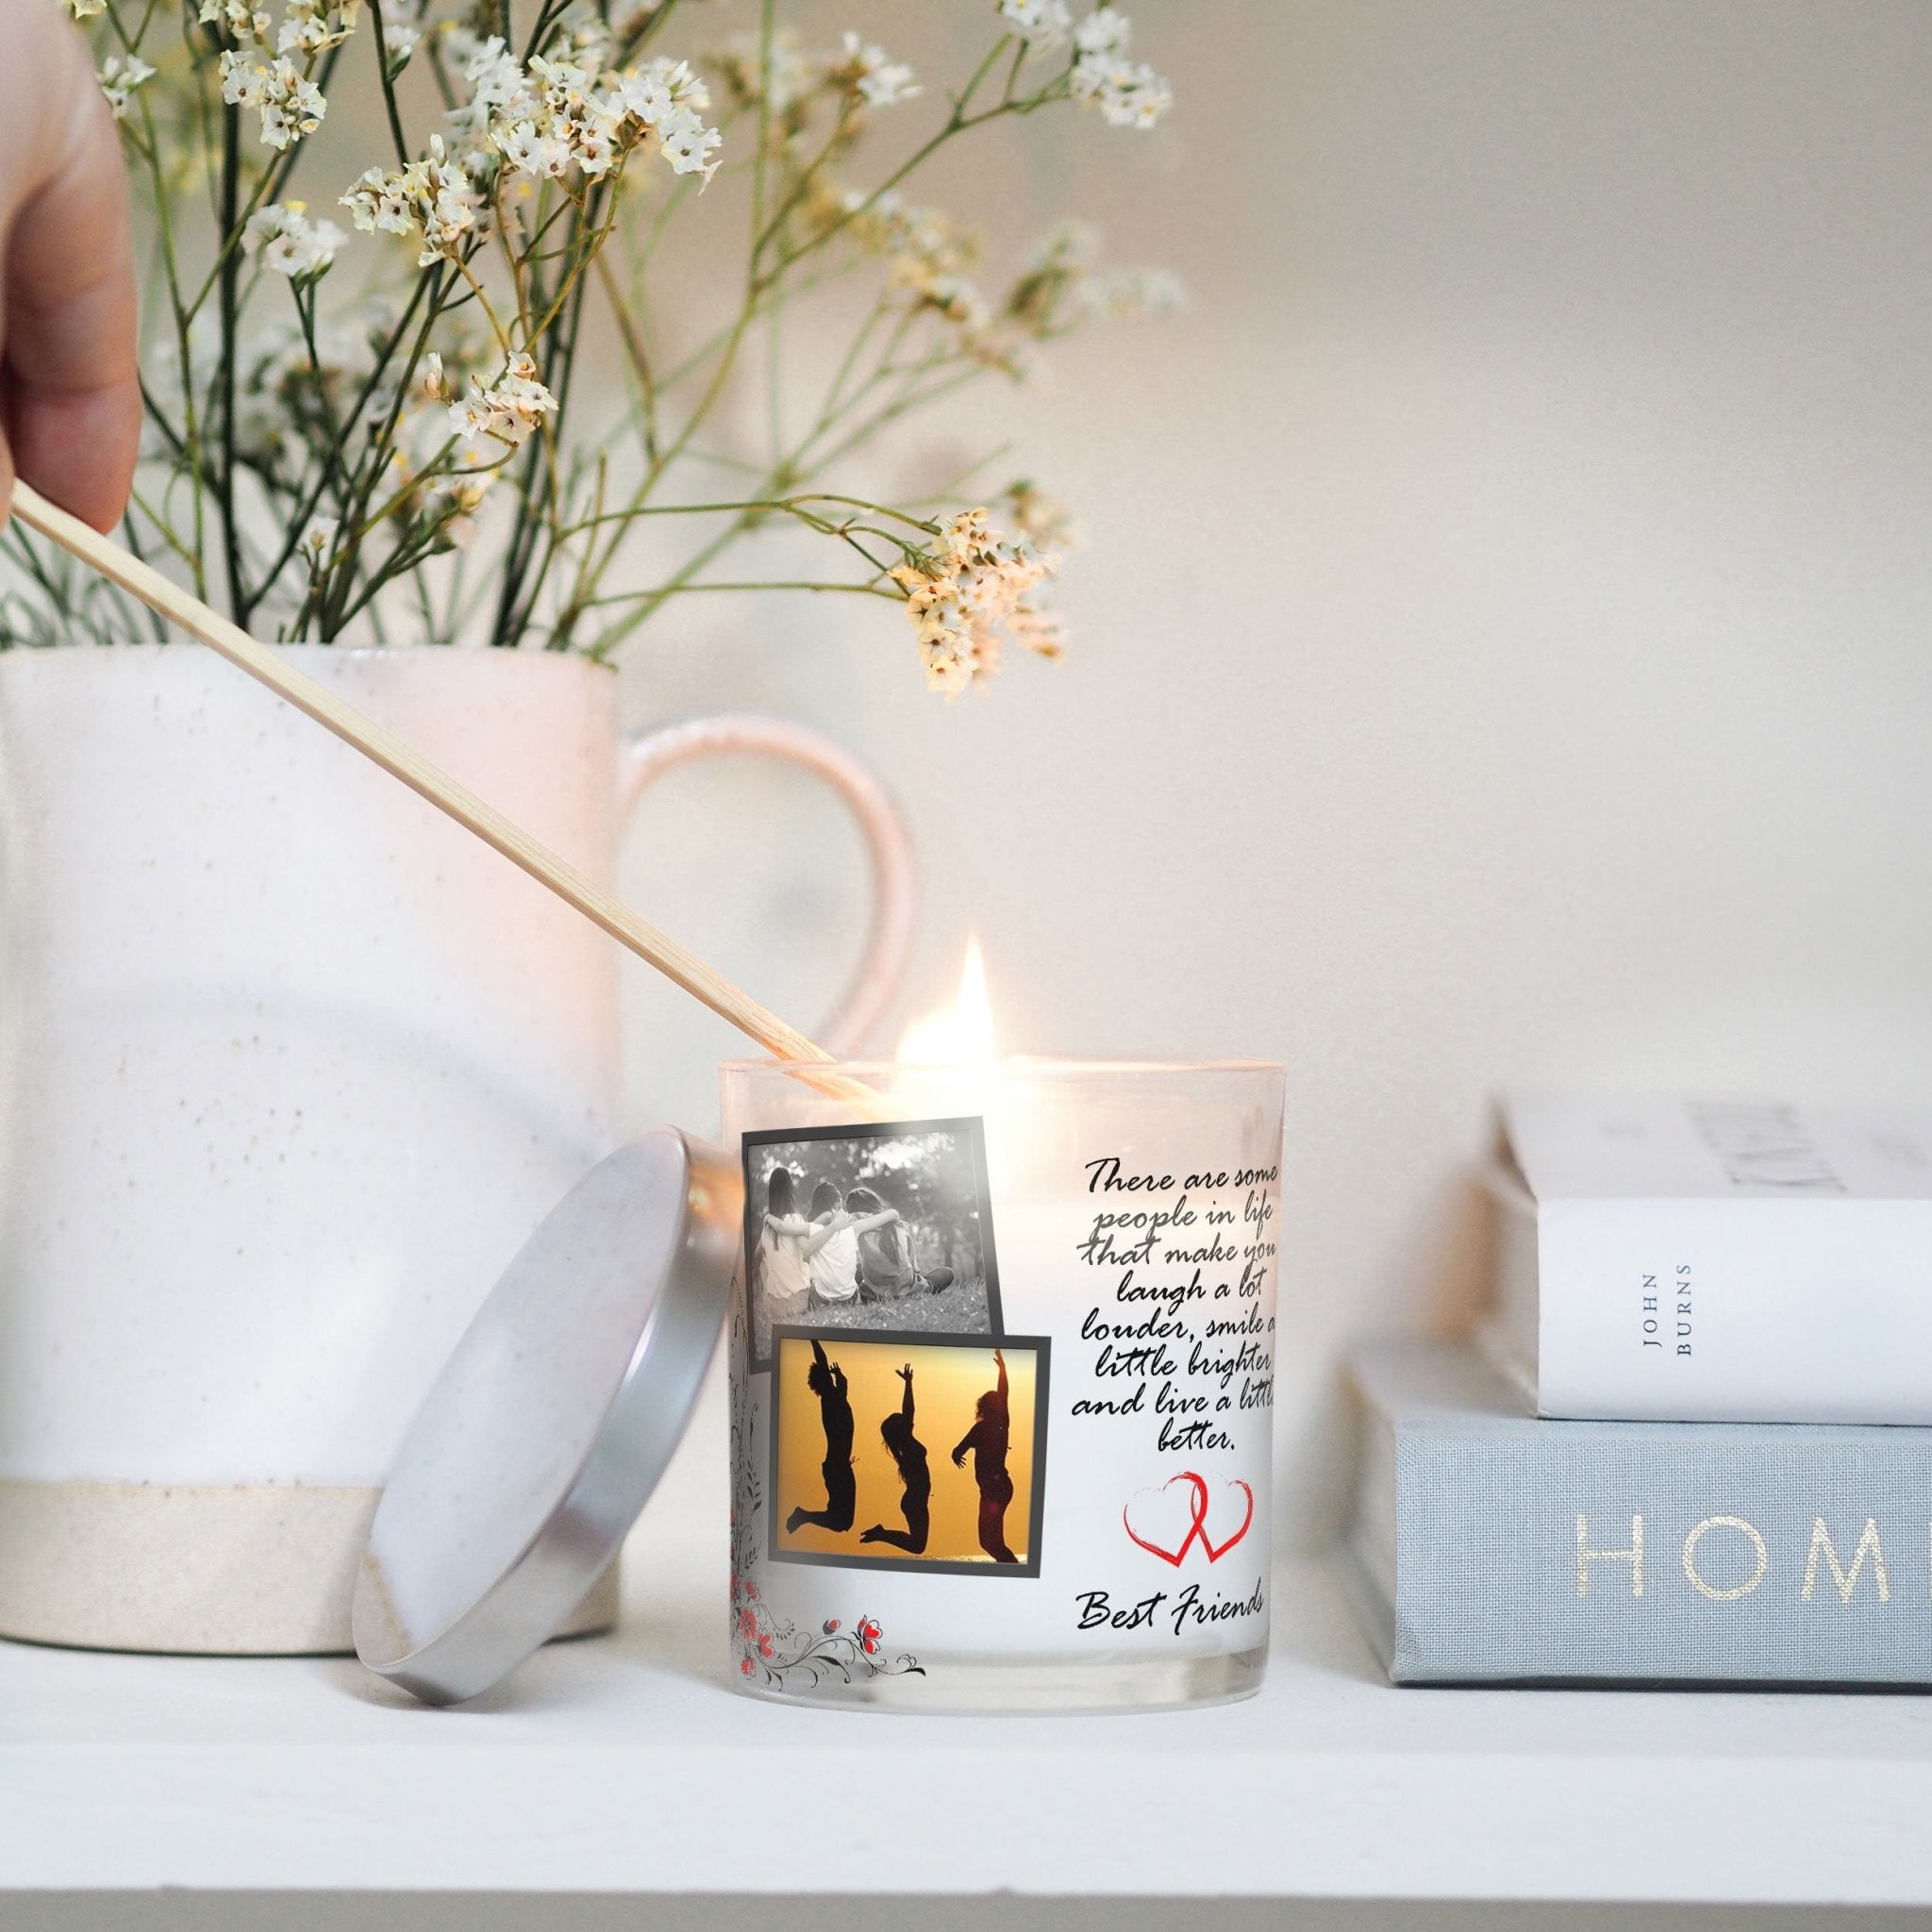 Best Friend Custom Photos Candle Holder | Pal Friendship Quotation Gift Ideas | Personalized Votive Glass with Picture | Home Decor Present Candleholder - Unique Prints